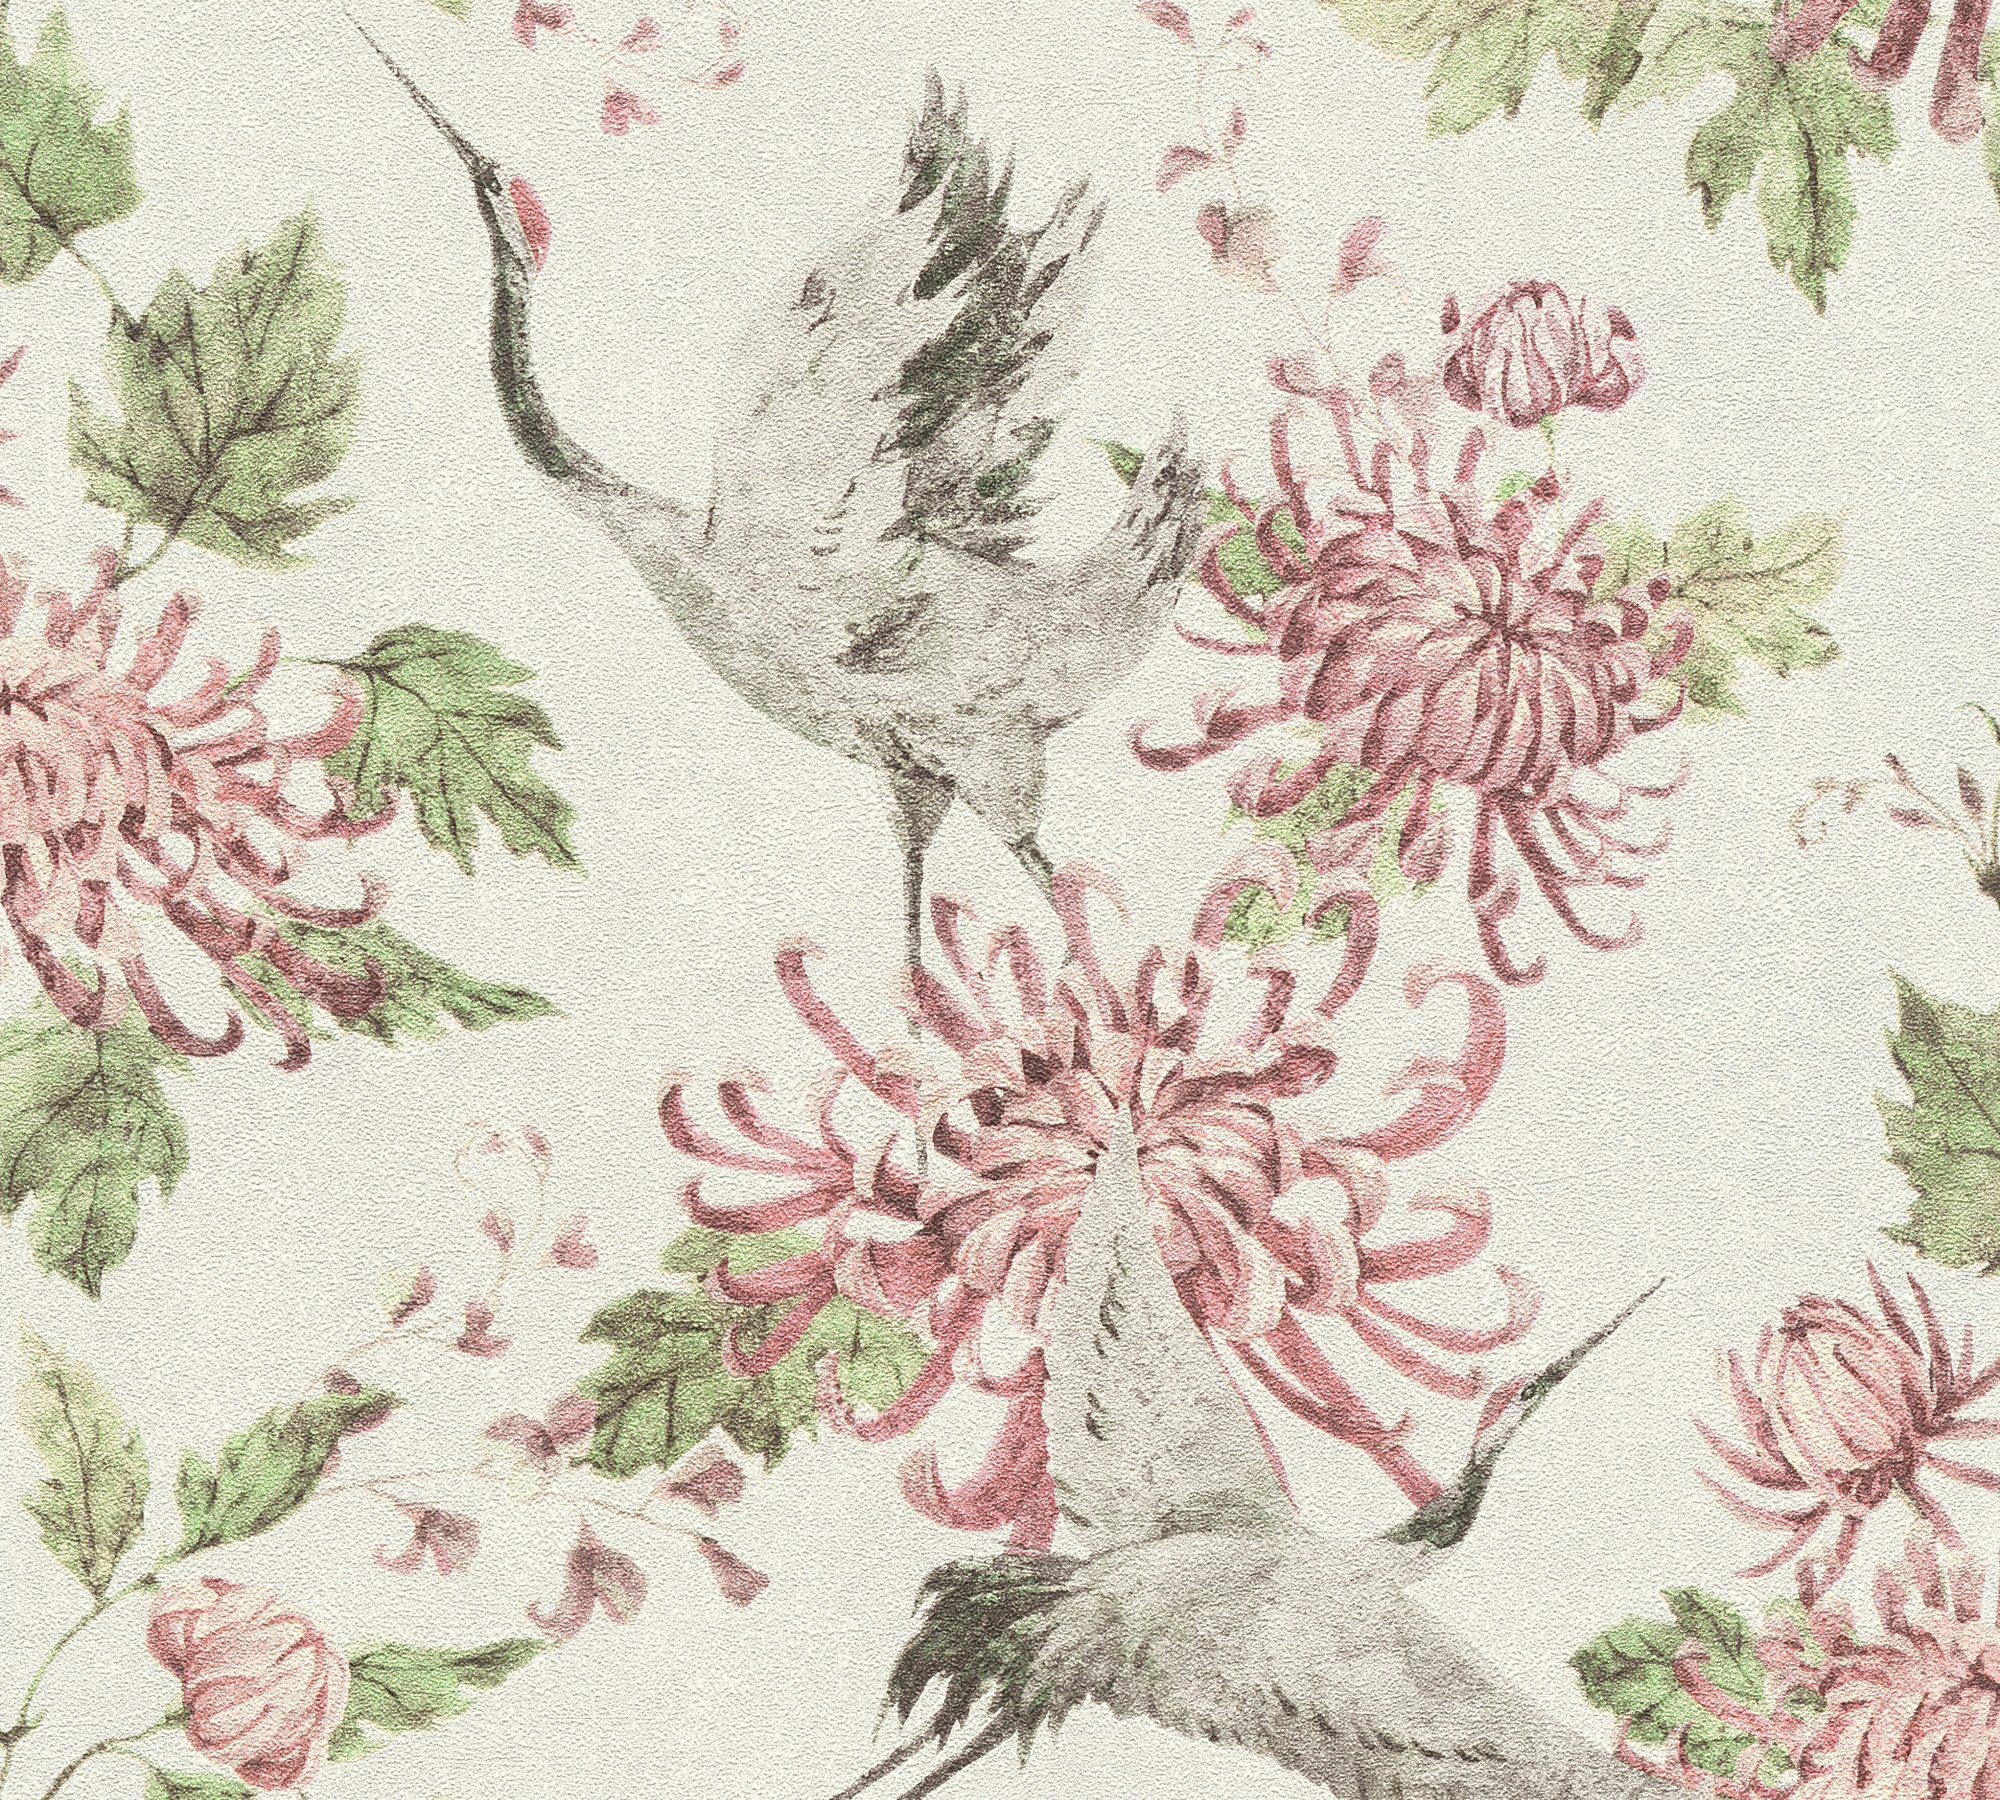 Asian Japanisch geprägt, Création floral, A.S. Fusion, Vogeltapete animal print, Tapete Vliestapete weiß/rose/grün